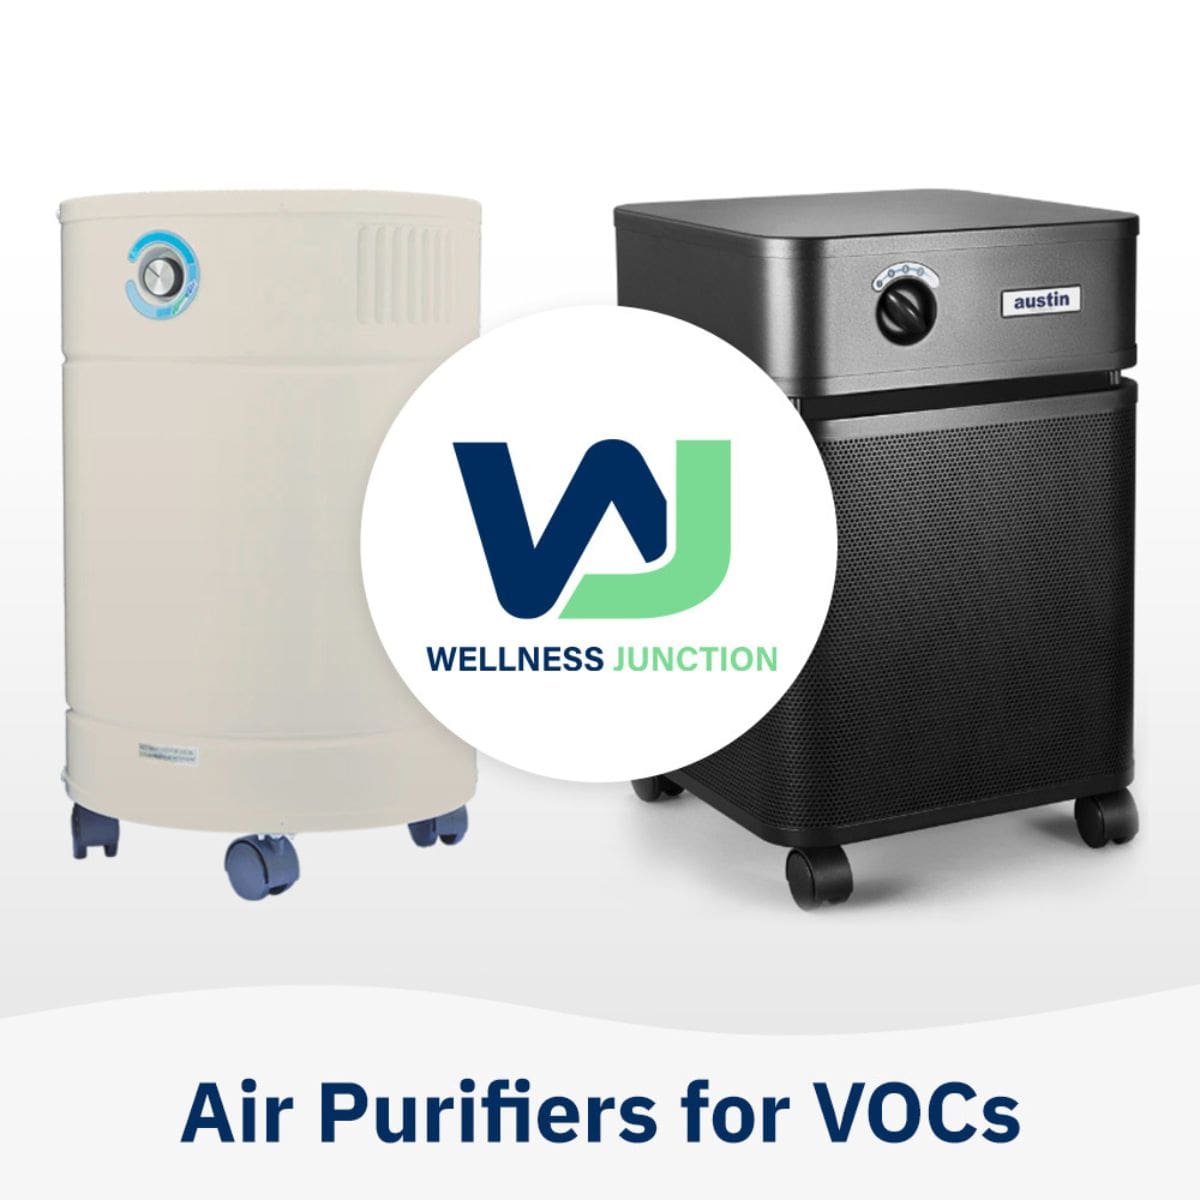 Air Purifiers for VOCs